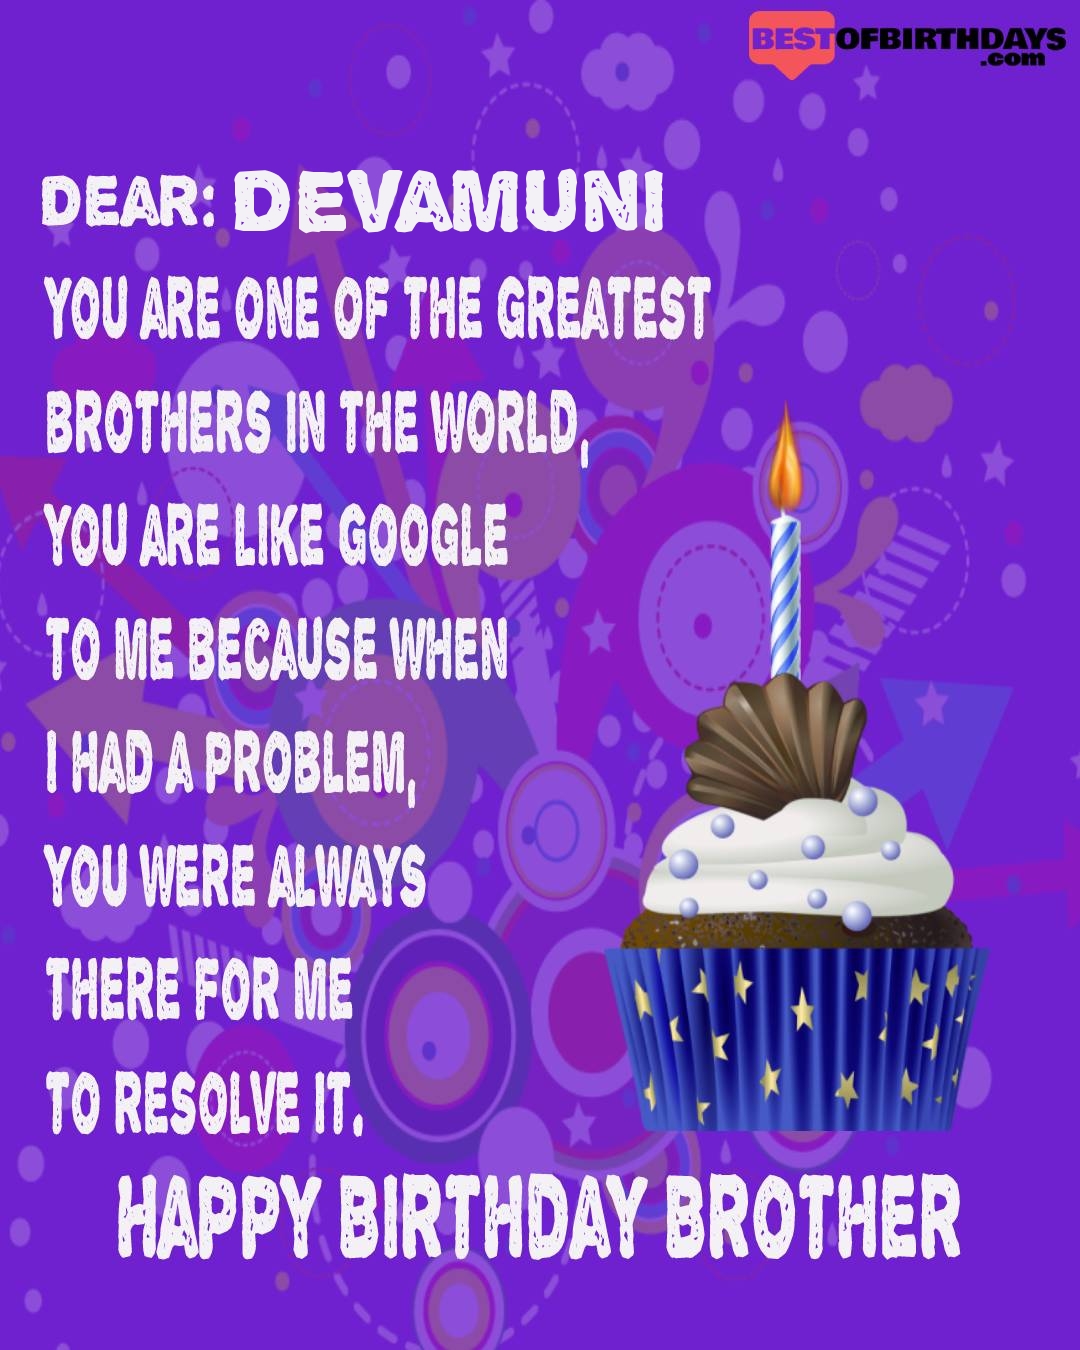 Happy birthday devamuni bhai brother bro